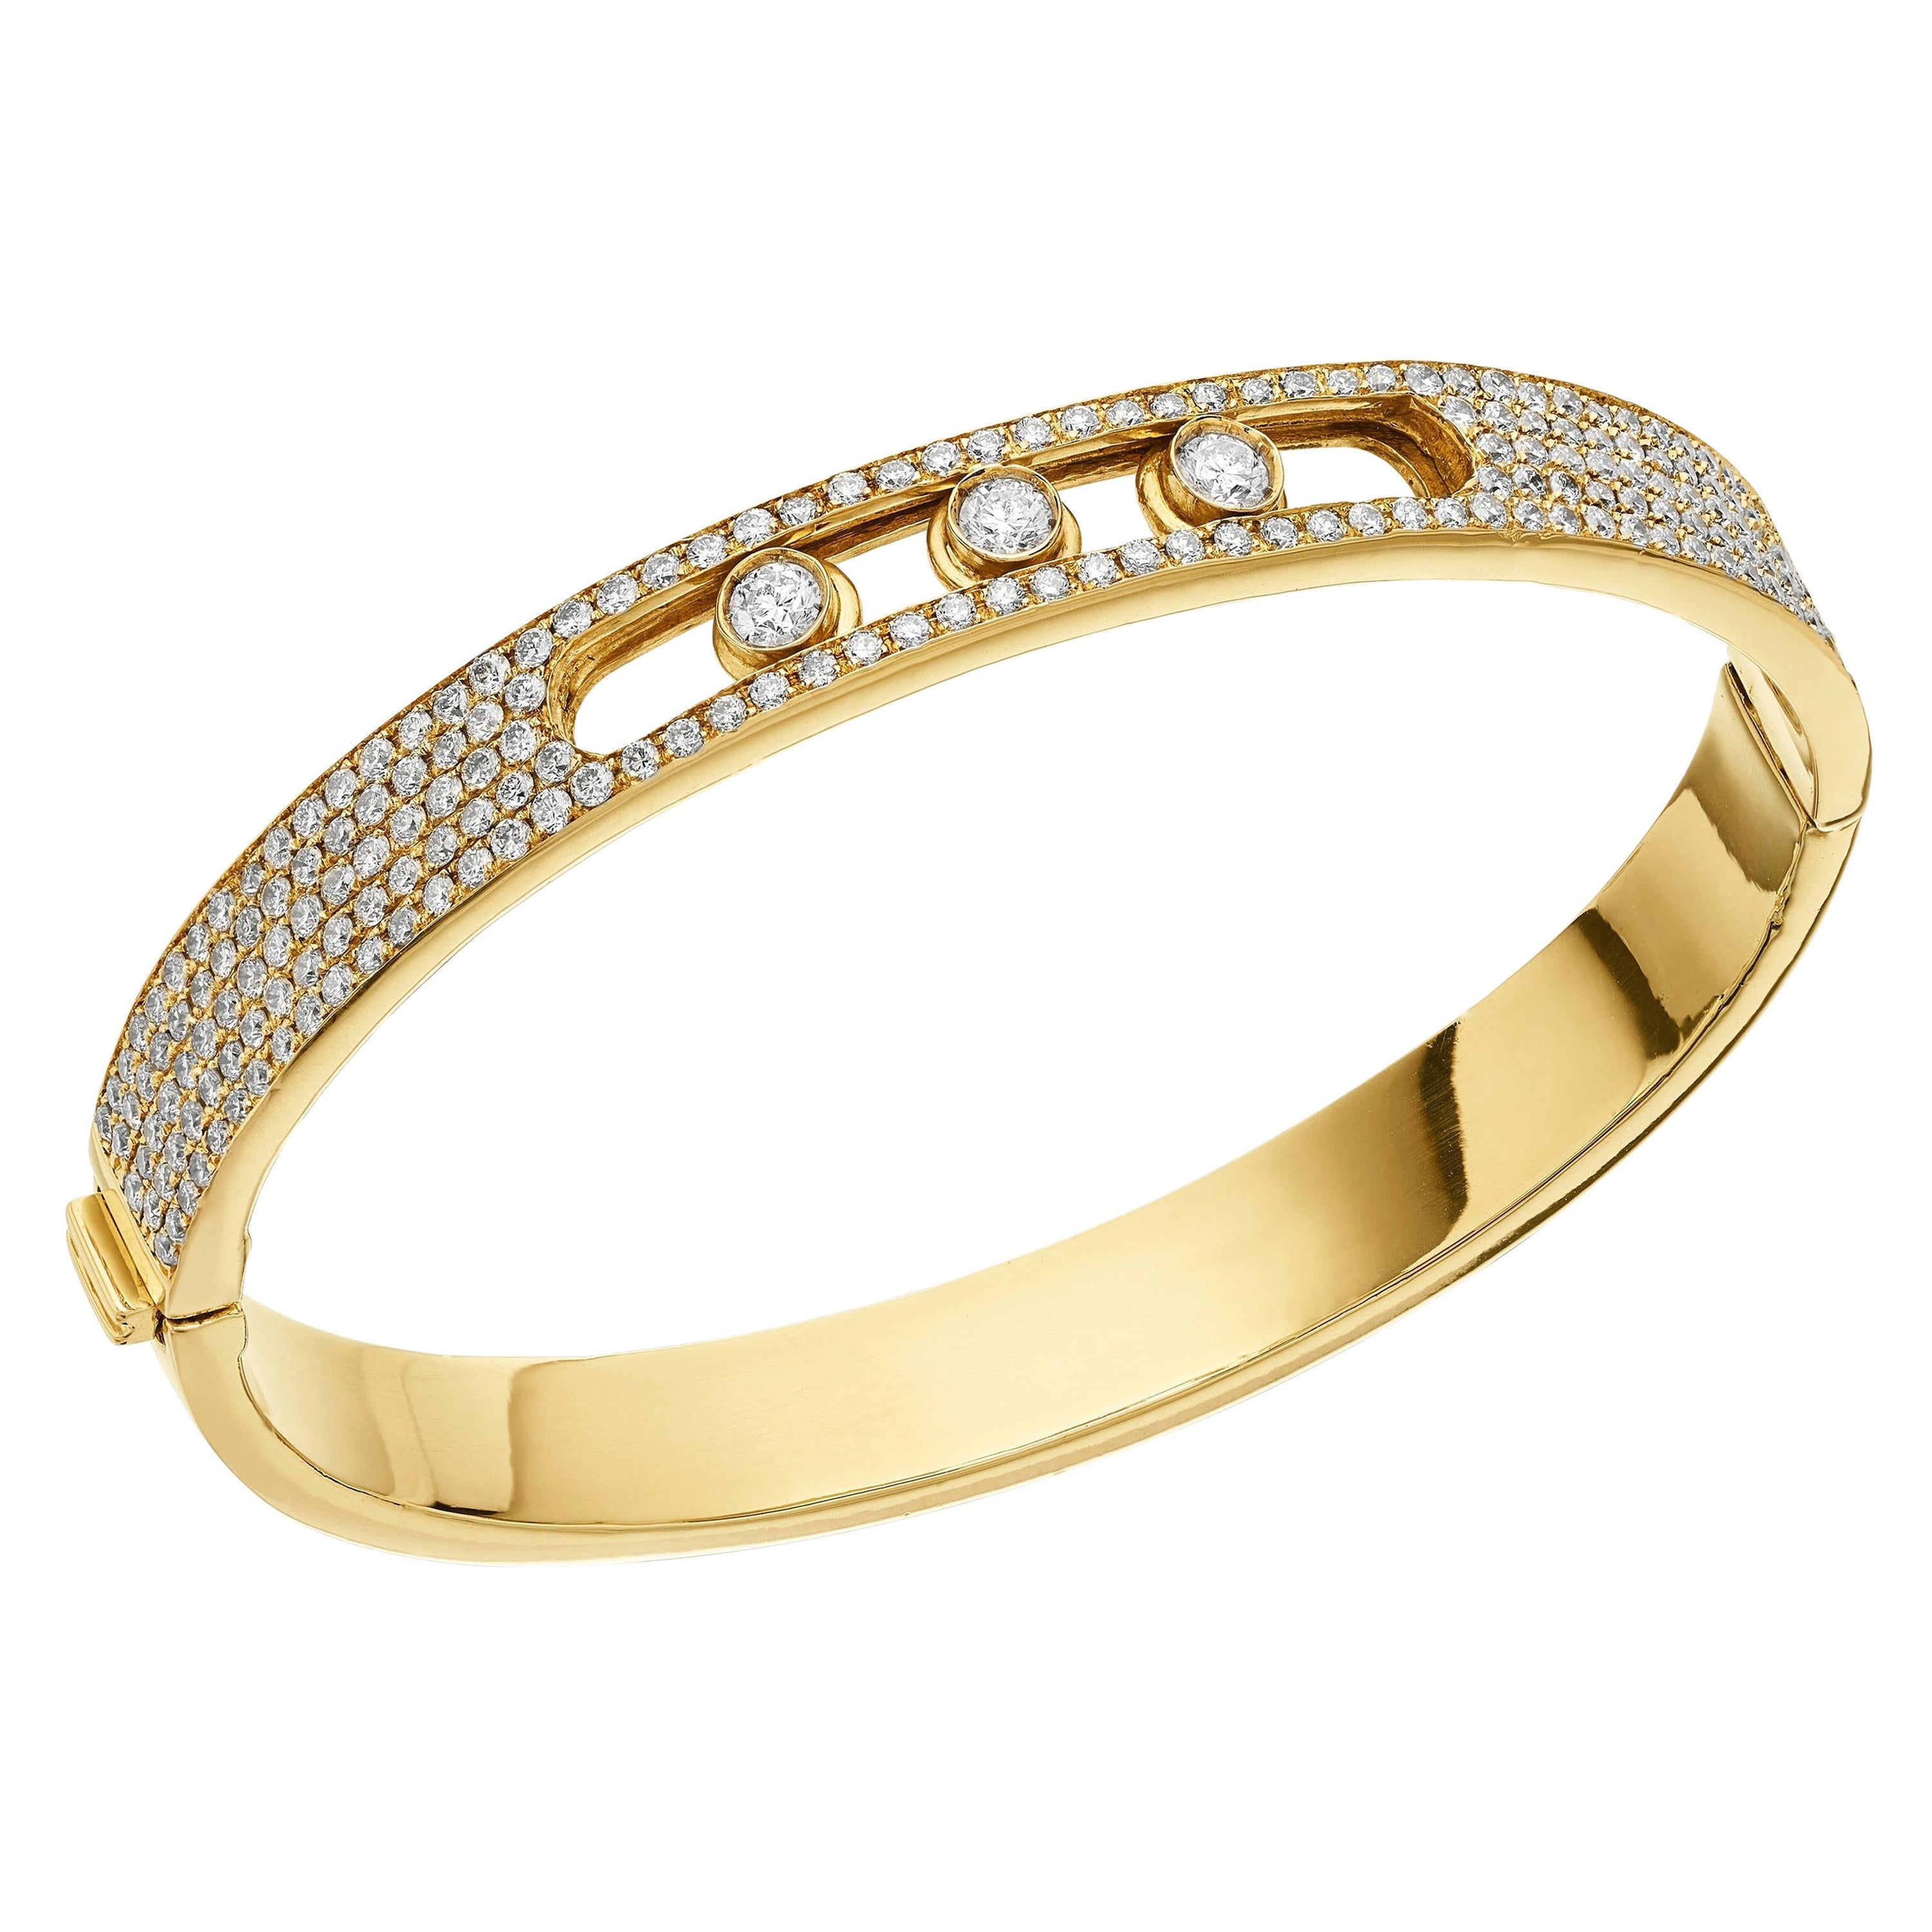 'Yessayan' Designer Moving Diamond Bangle in 18ct Yellow Gold